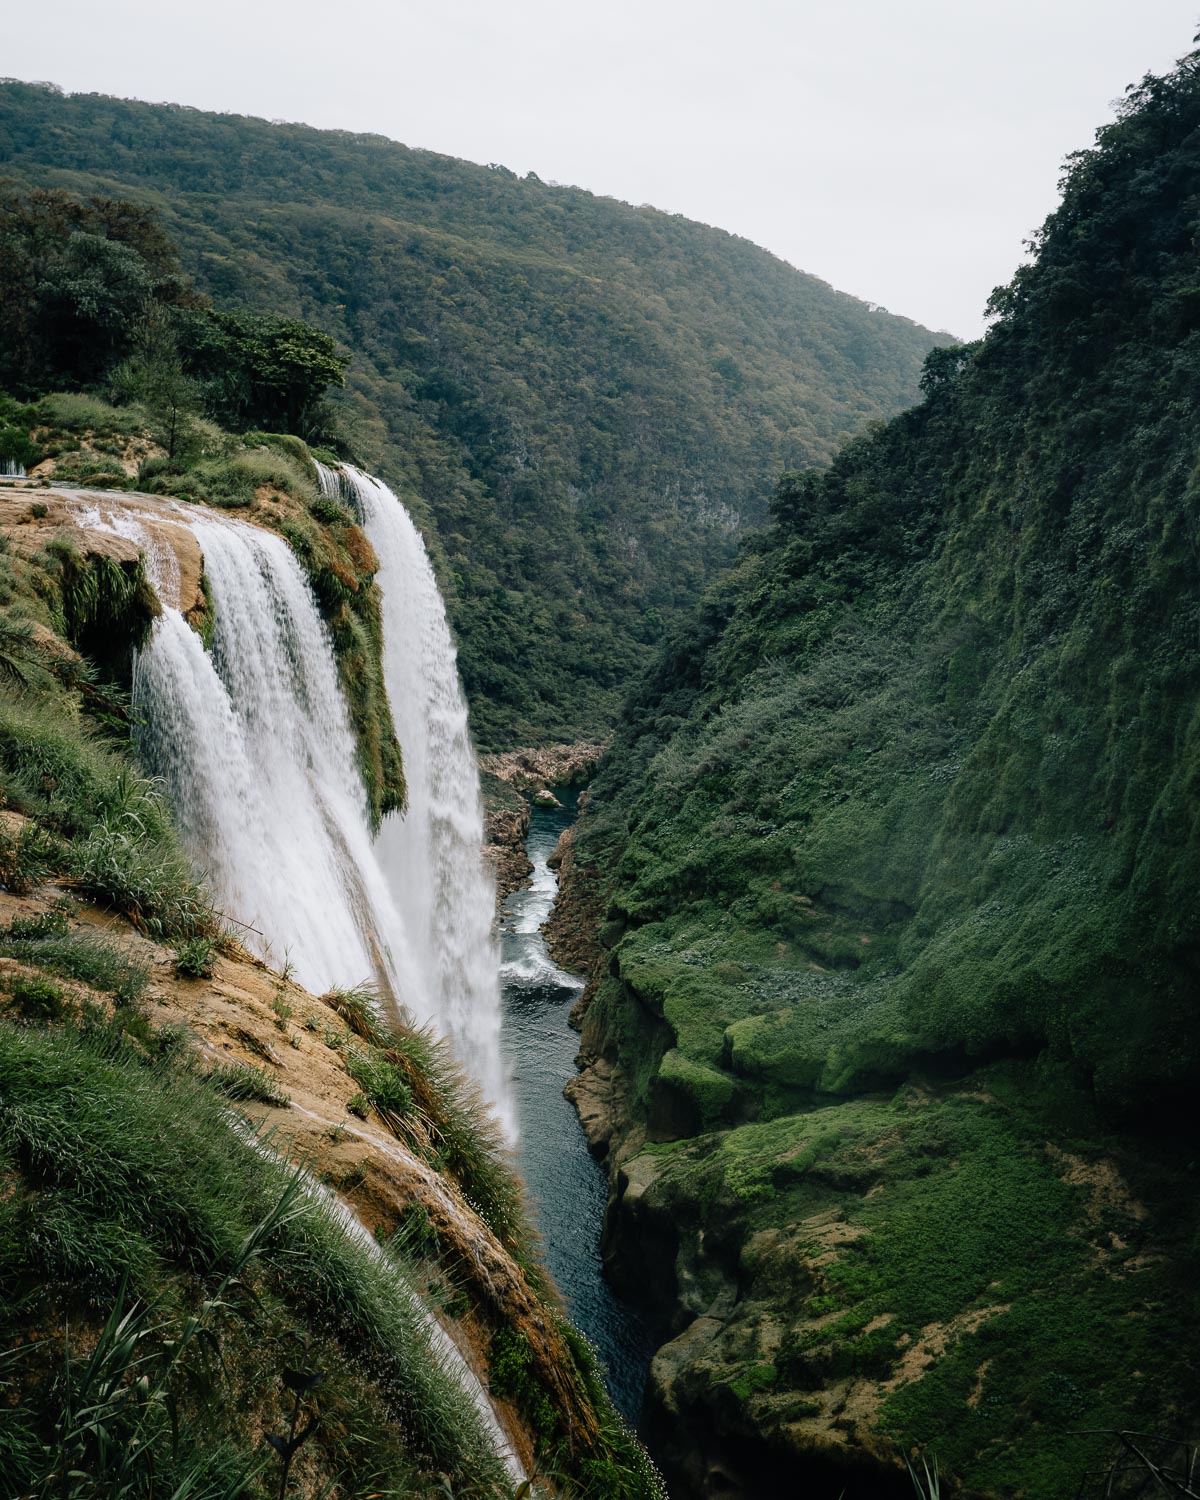 Cascada Tamul, the most impressive waterfall of the Huasteca Potosina